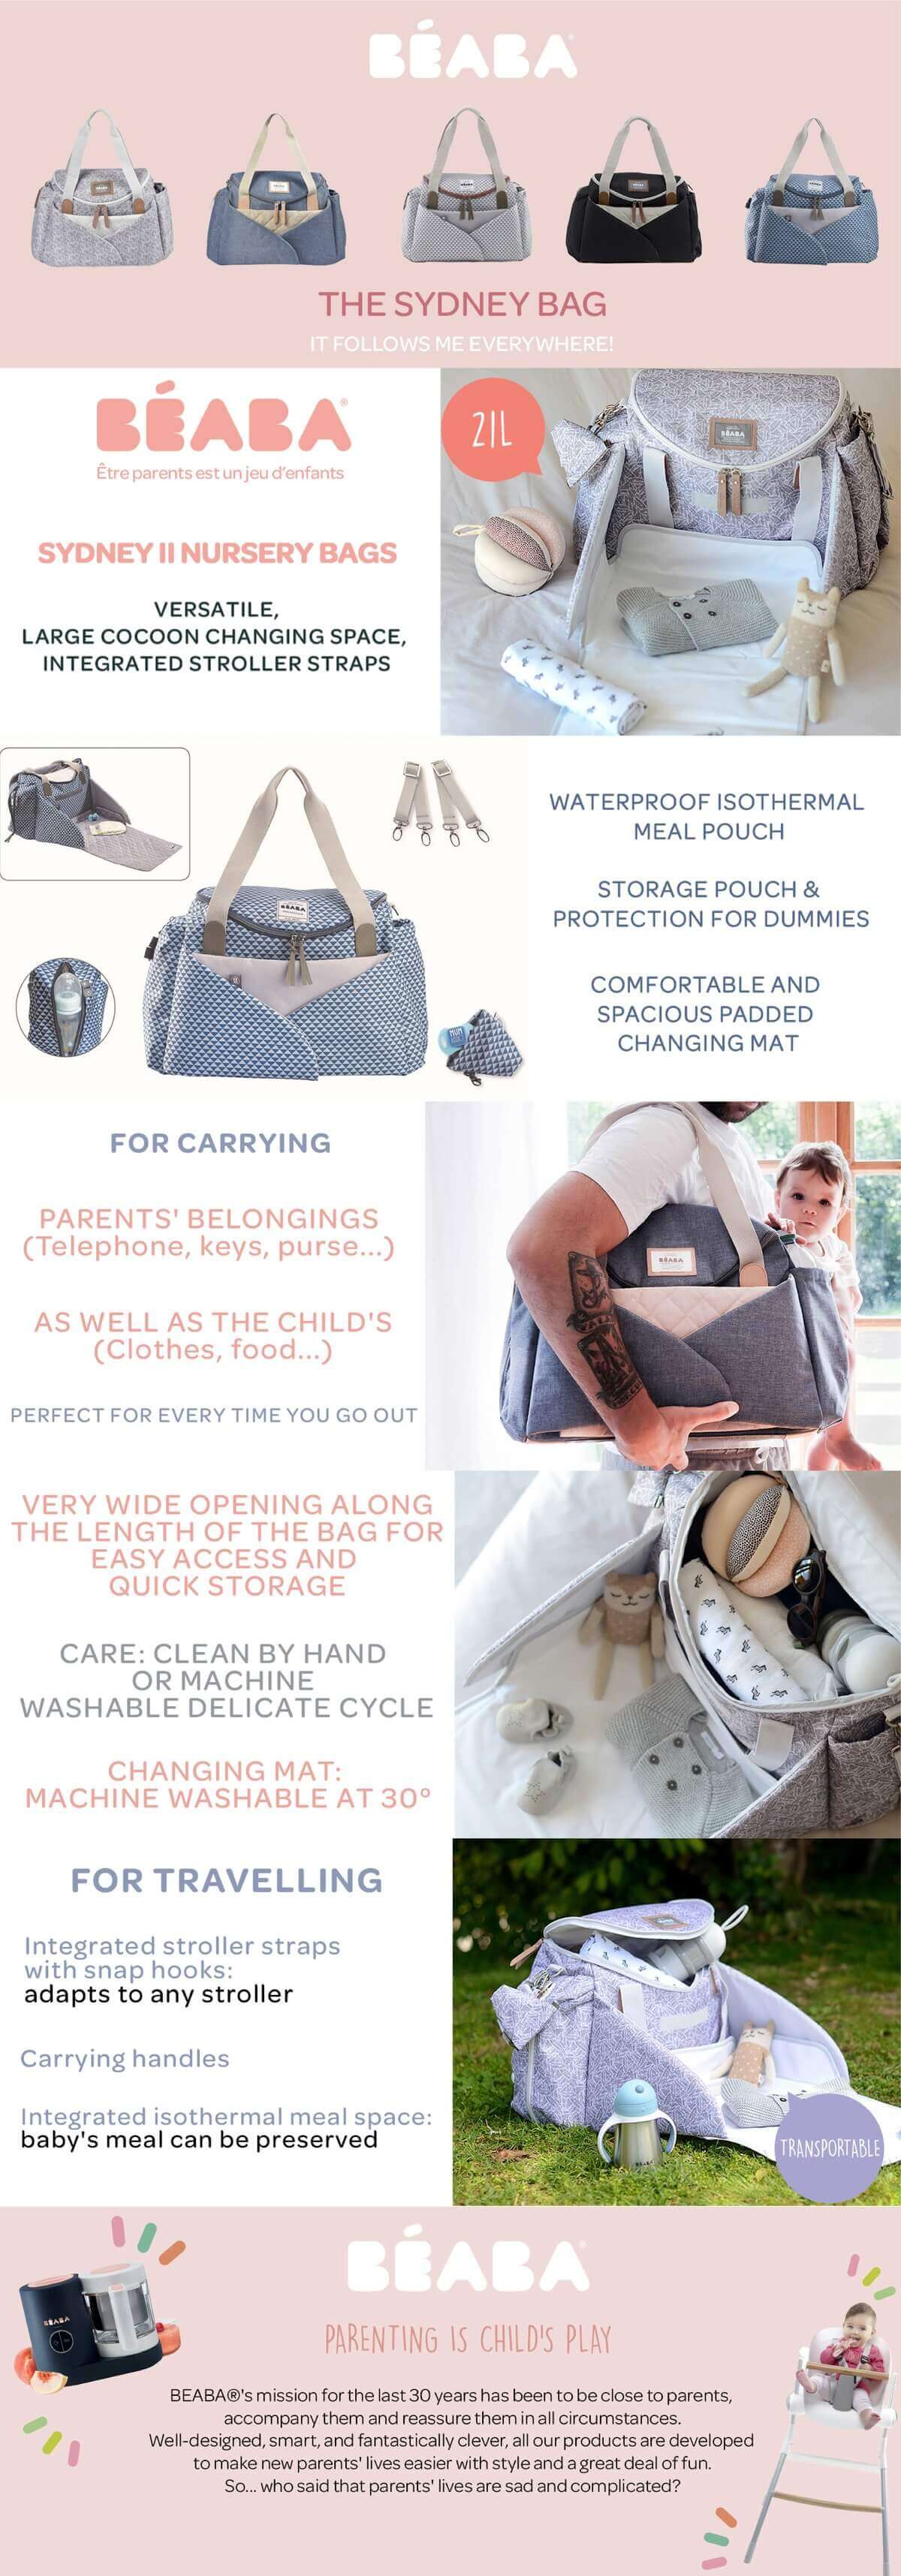 Beaba Sydney II Changing Bag - Play Print, Marsala